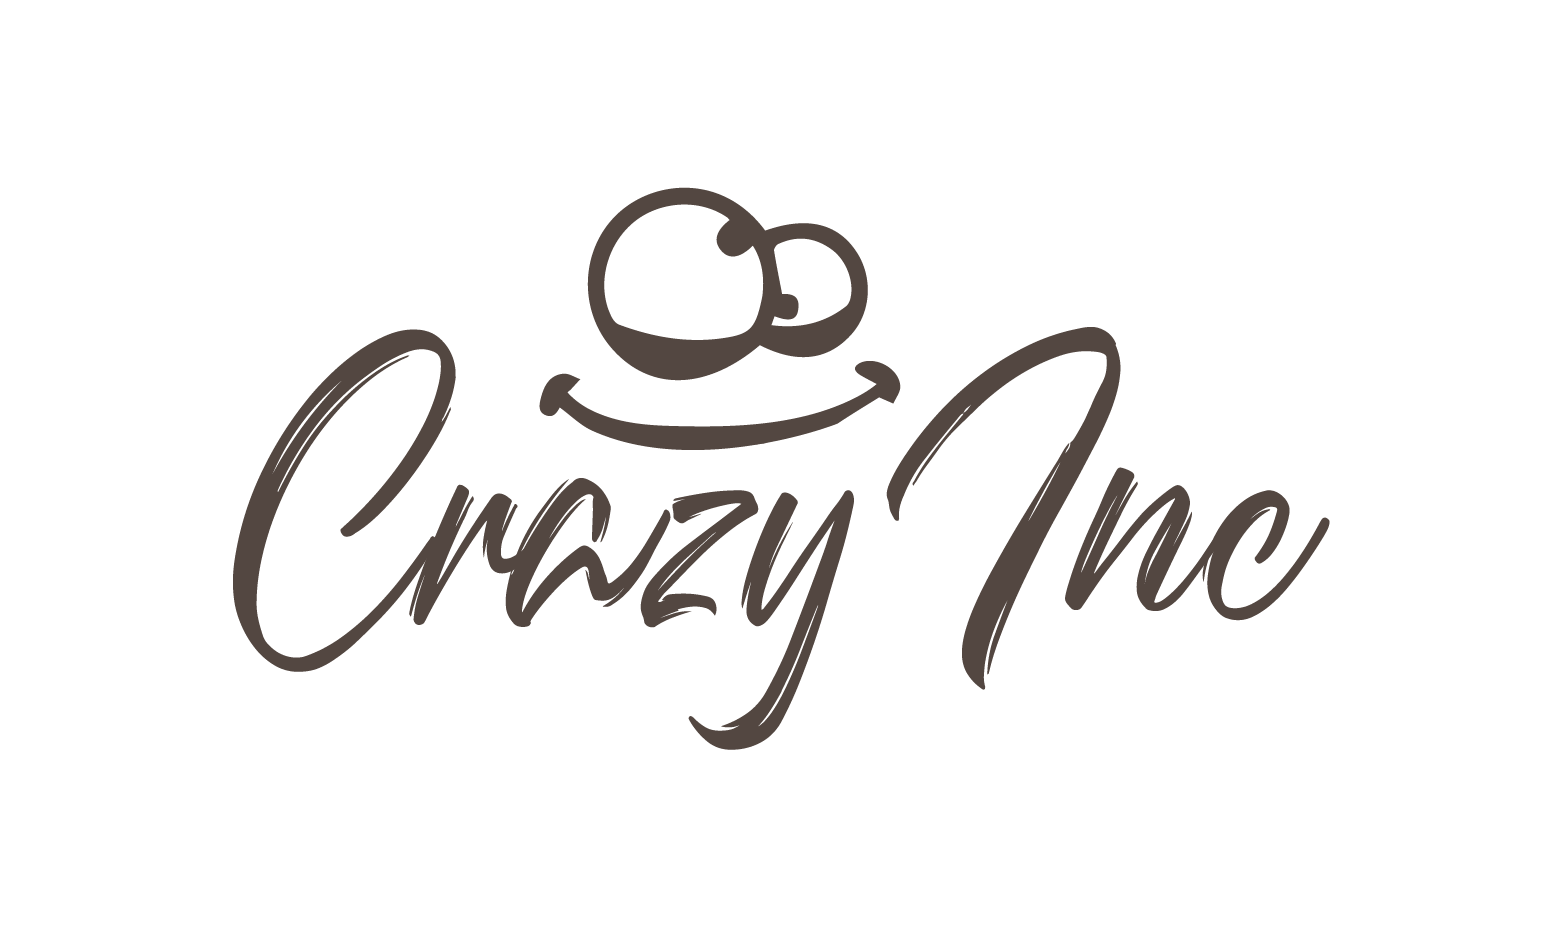 CrazyInc.com - Creative brandable domain for sale